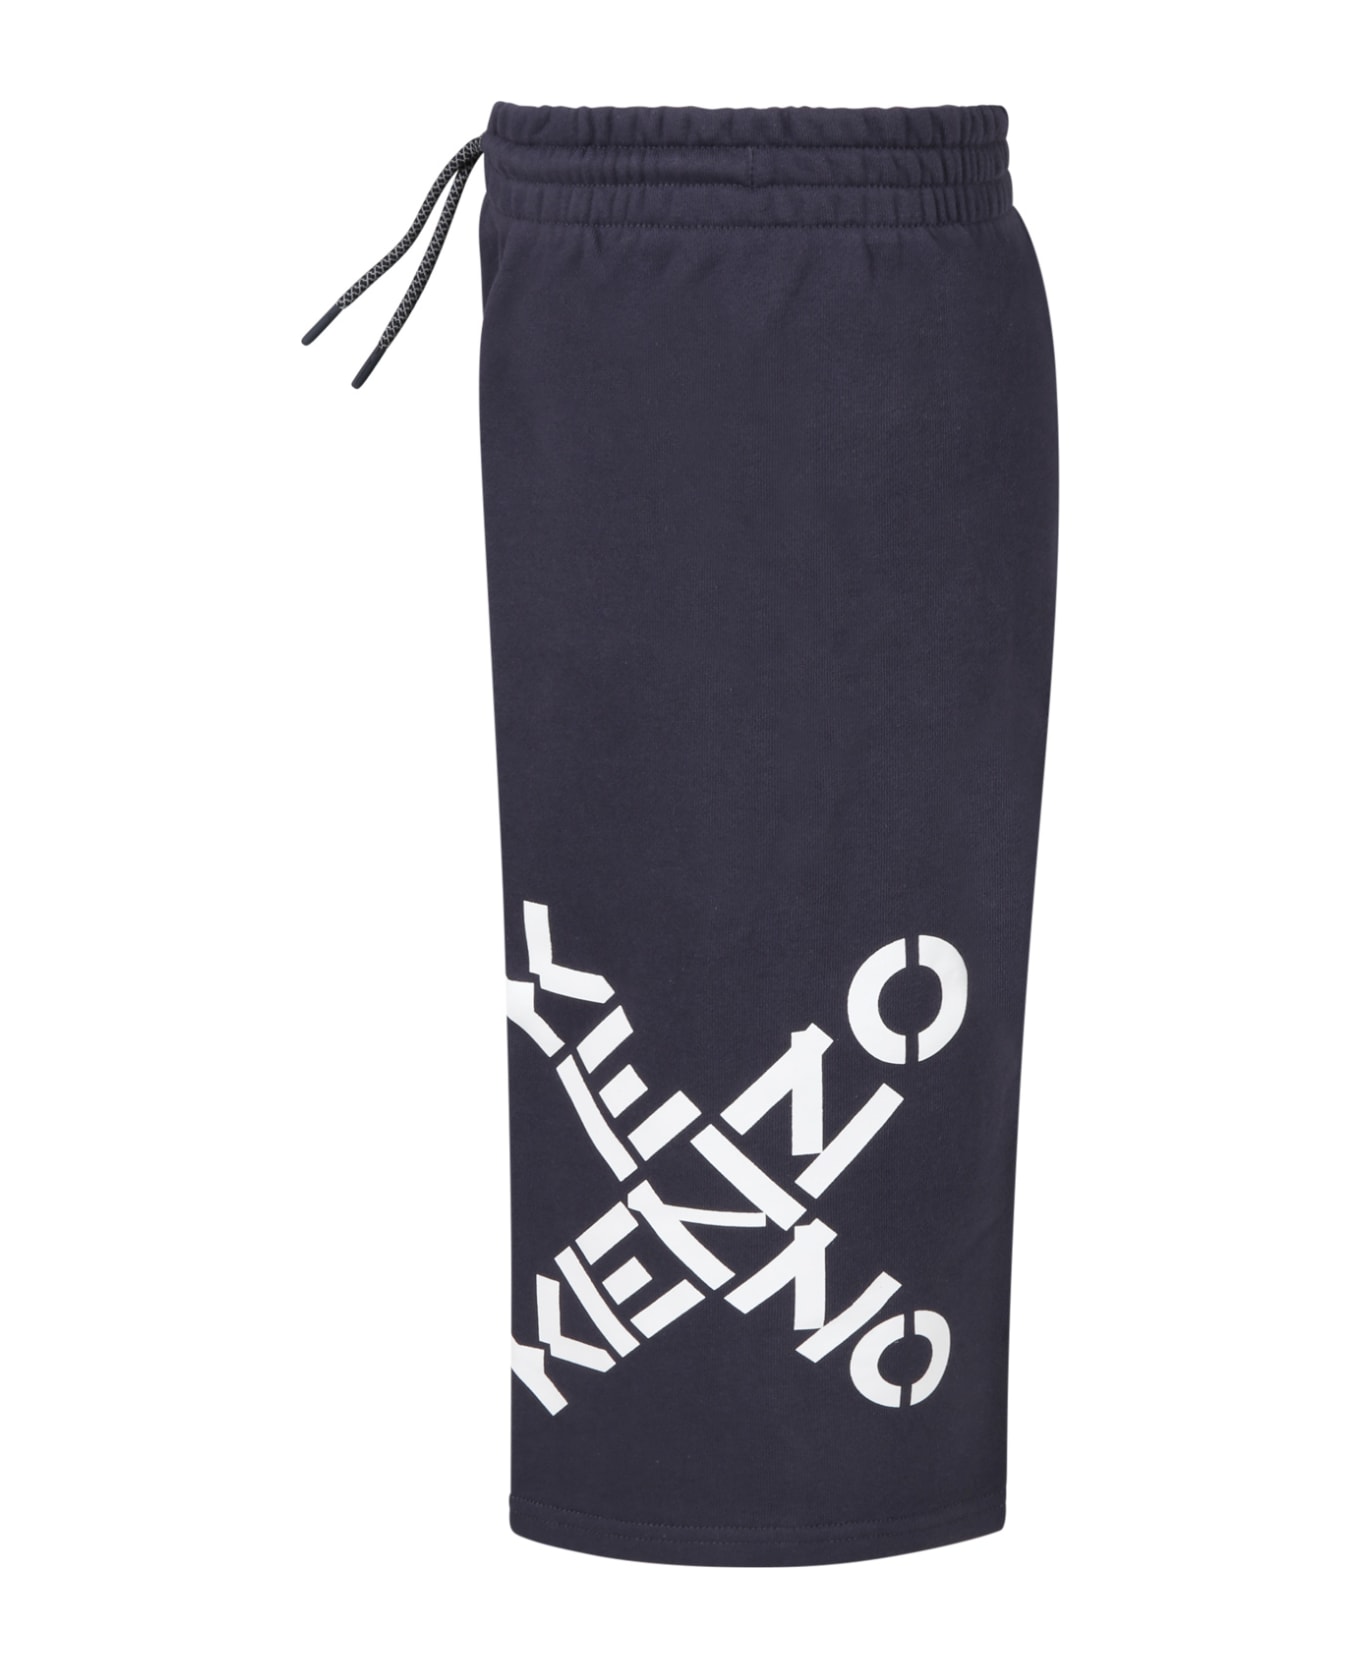 Kenzo Kids Grey Pants For Girl With Logos - Grey